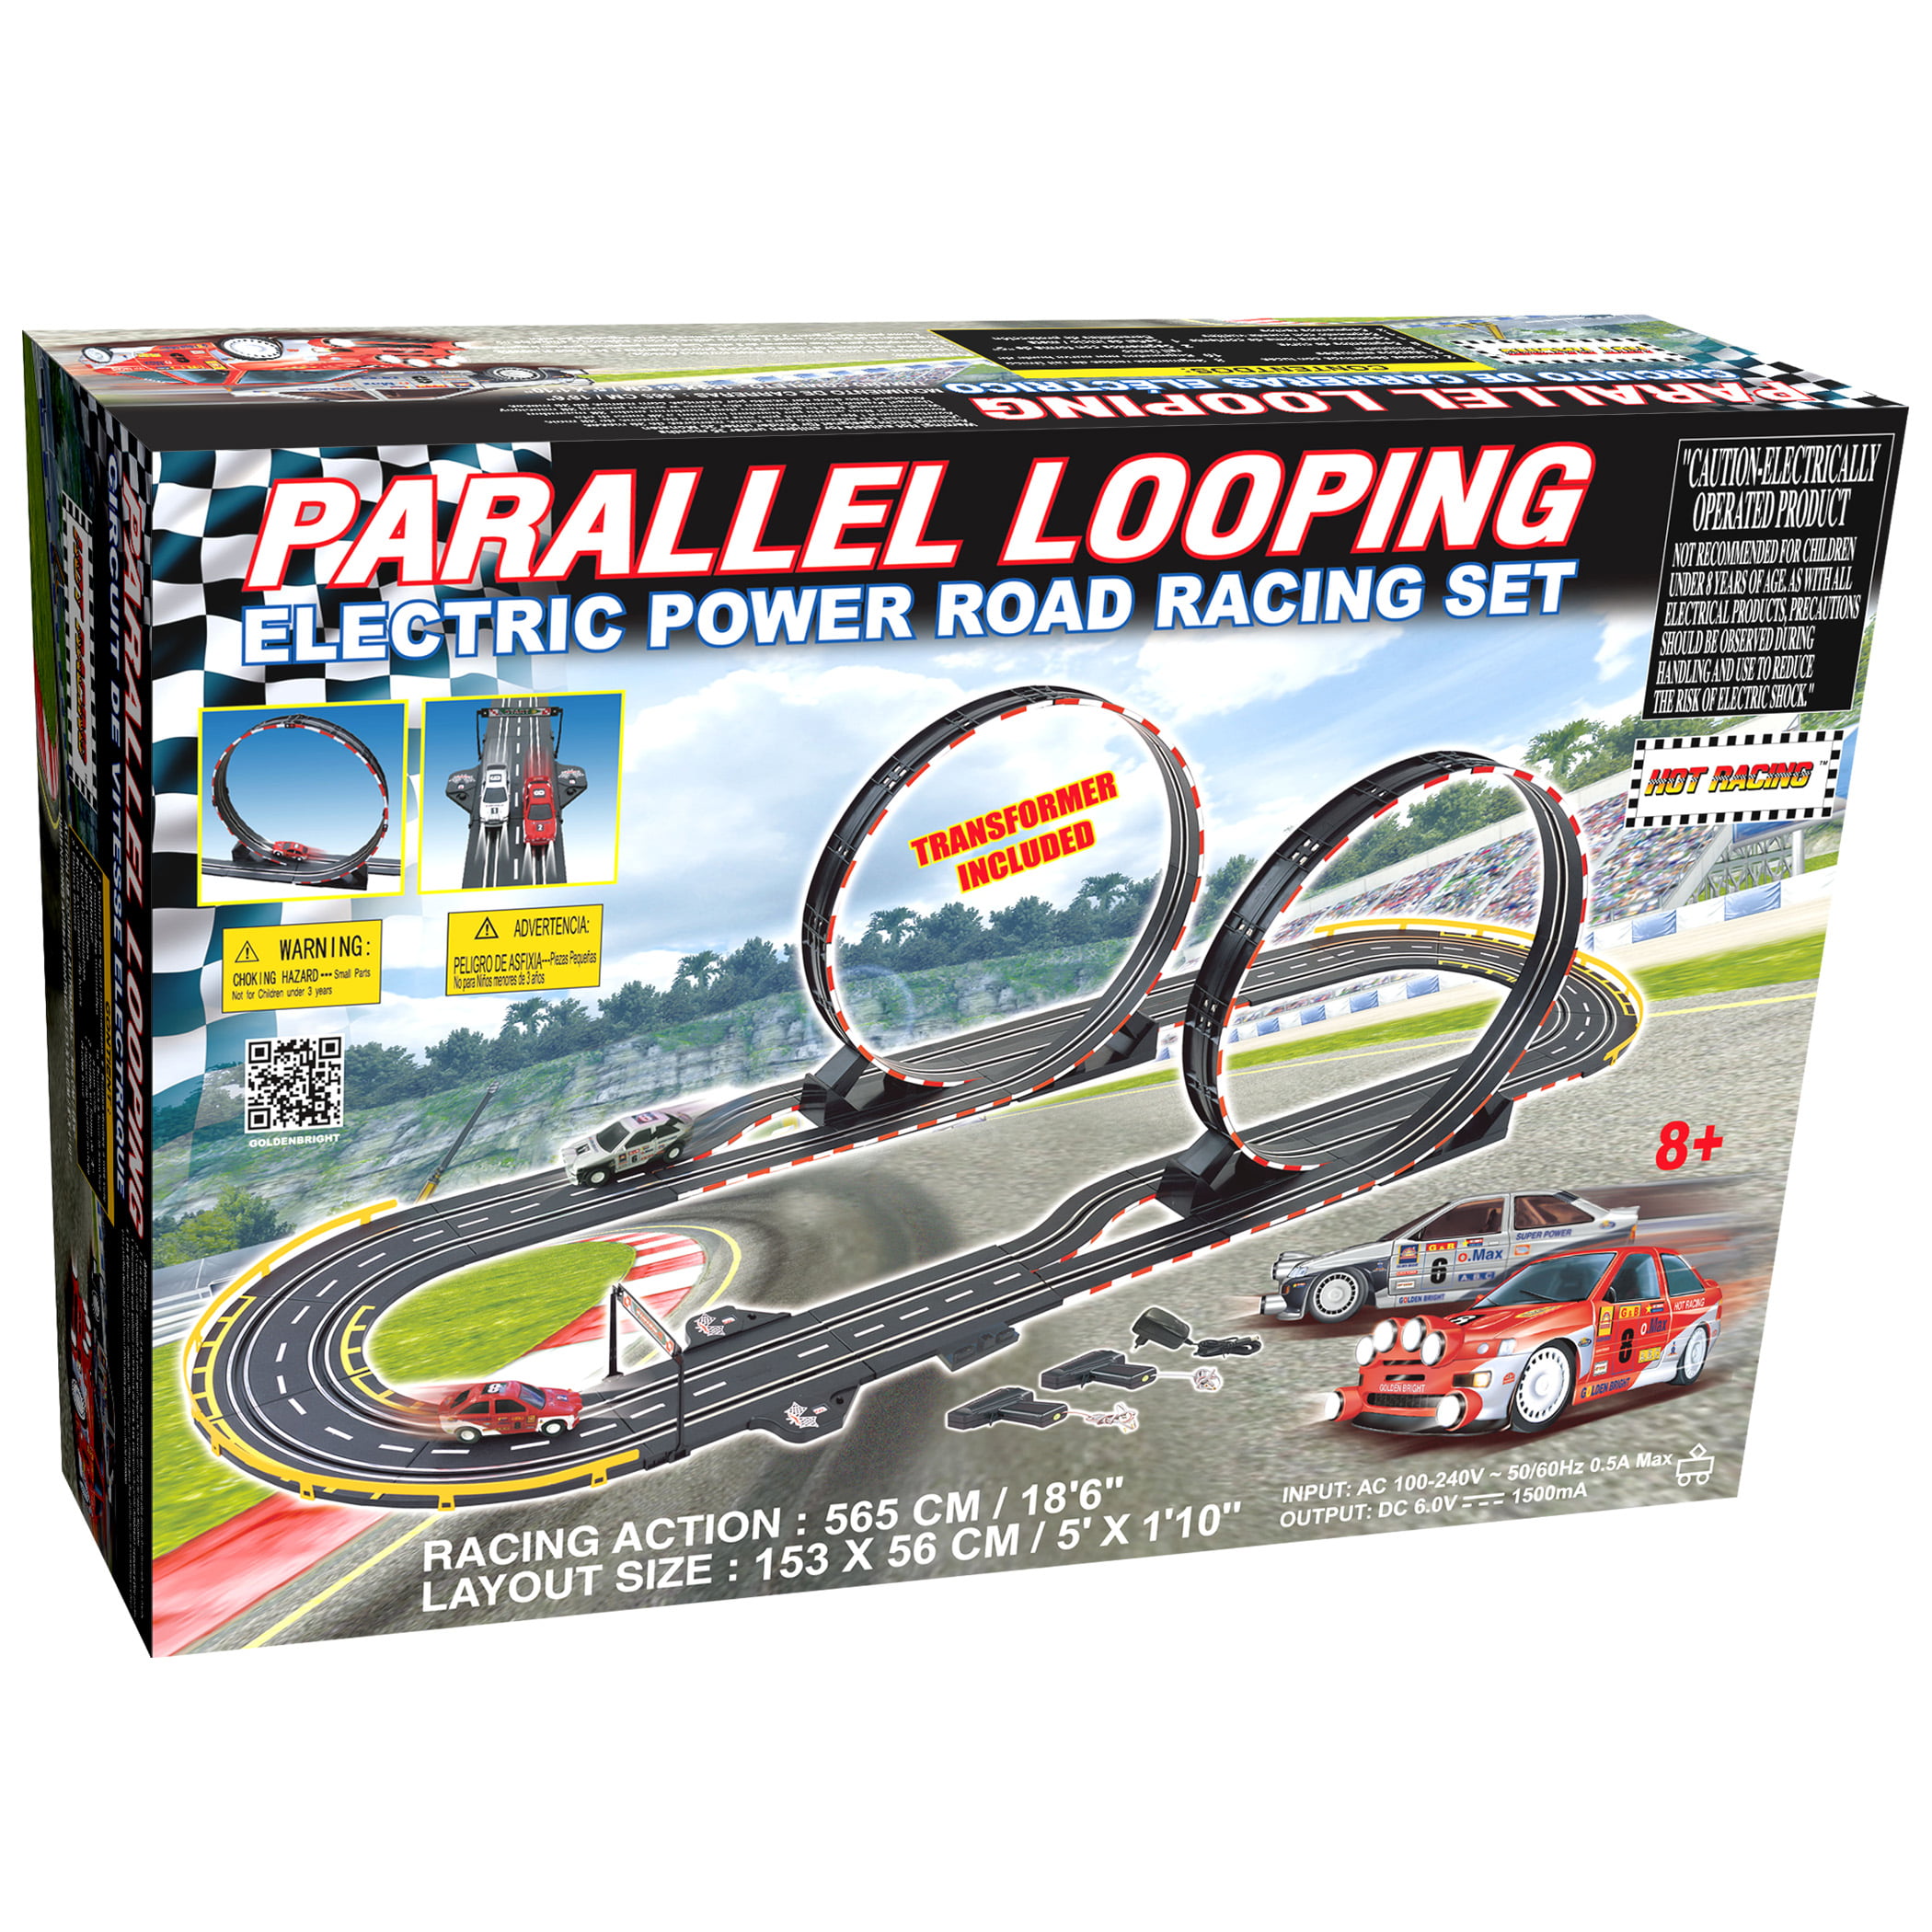 Big SUPER LOOPS Electric Power ROAD RACING SET 22+ft Race Track+2 Slot Cars kids 